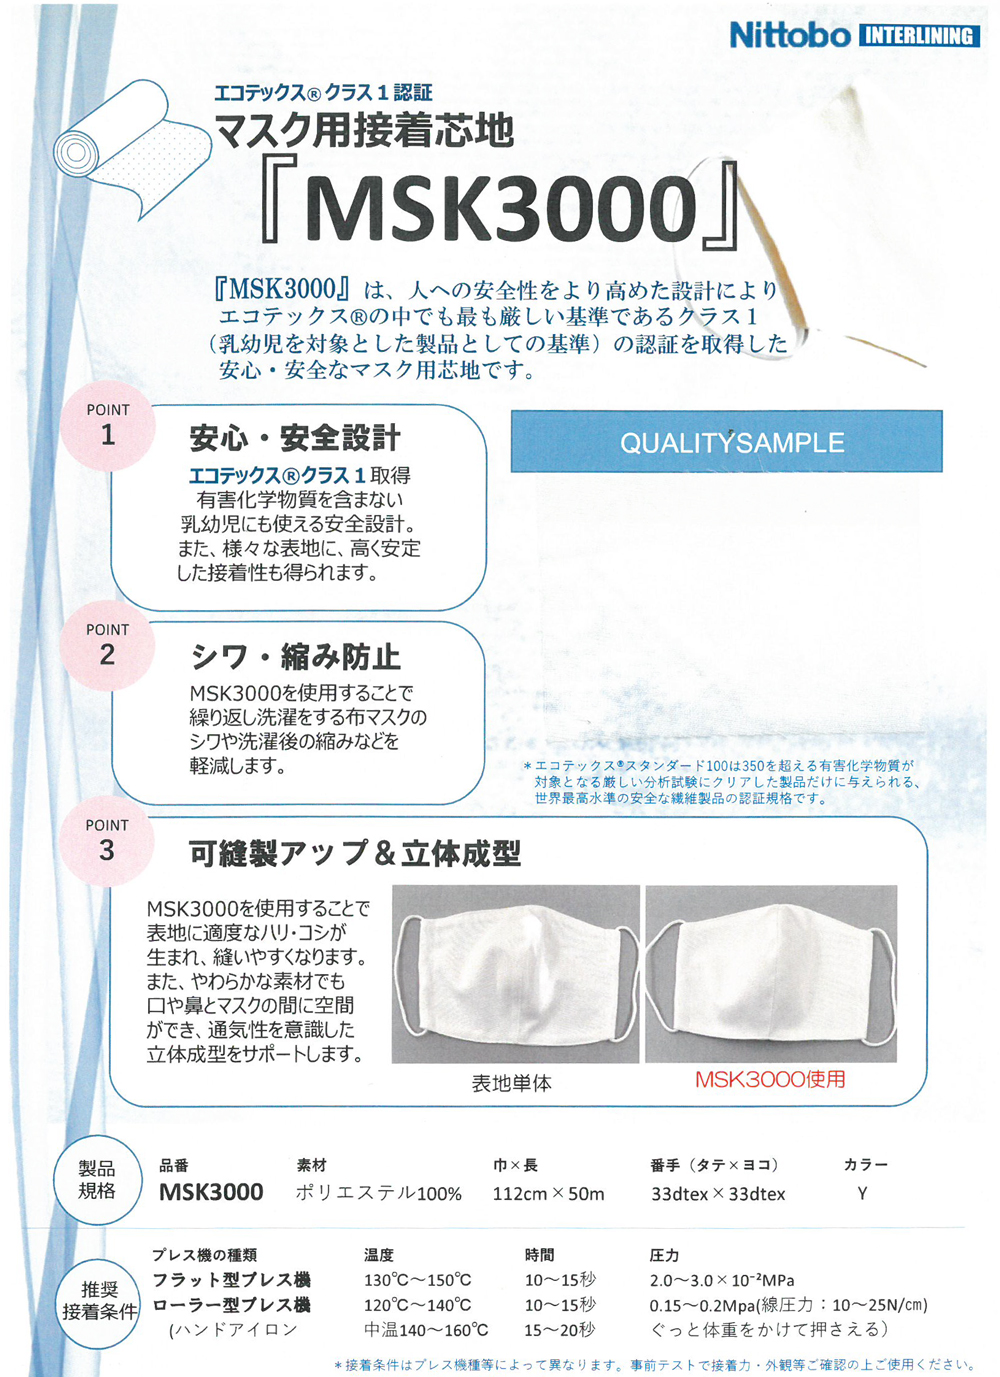 MSK3000 Ecotex® Standard 100 인증 마스크용 접착심지 닛토보